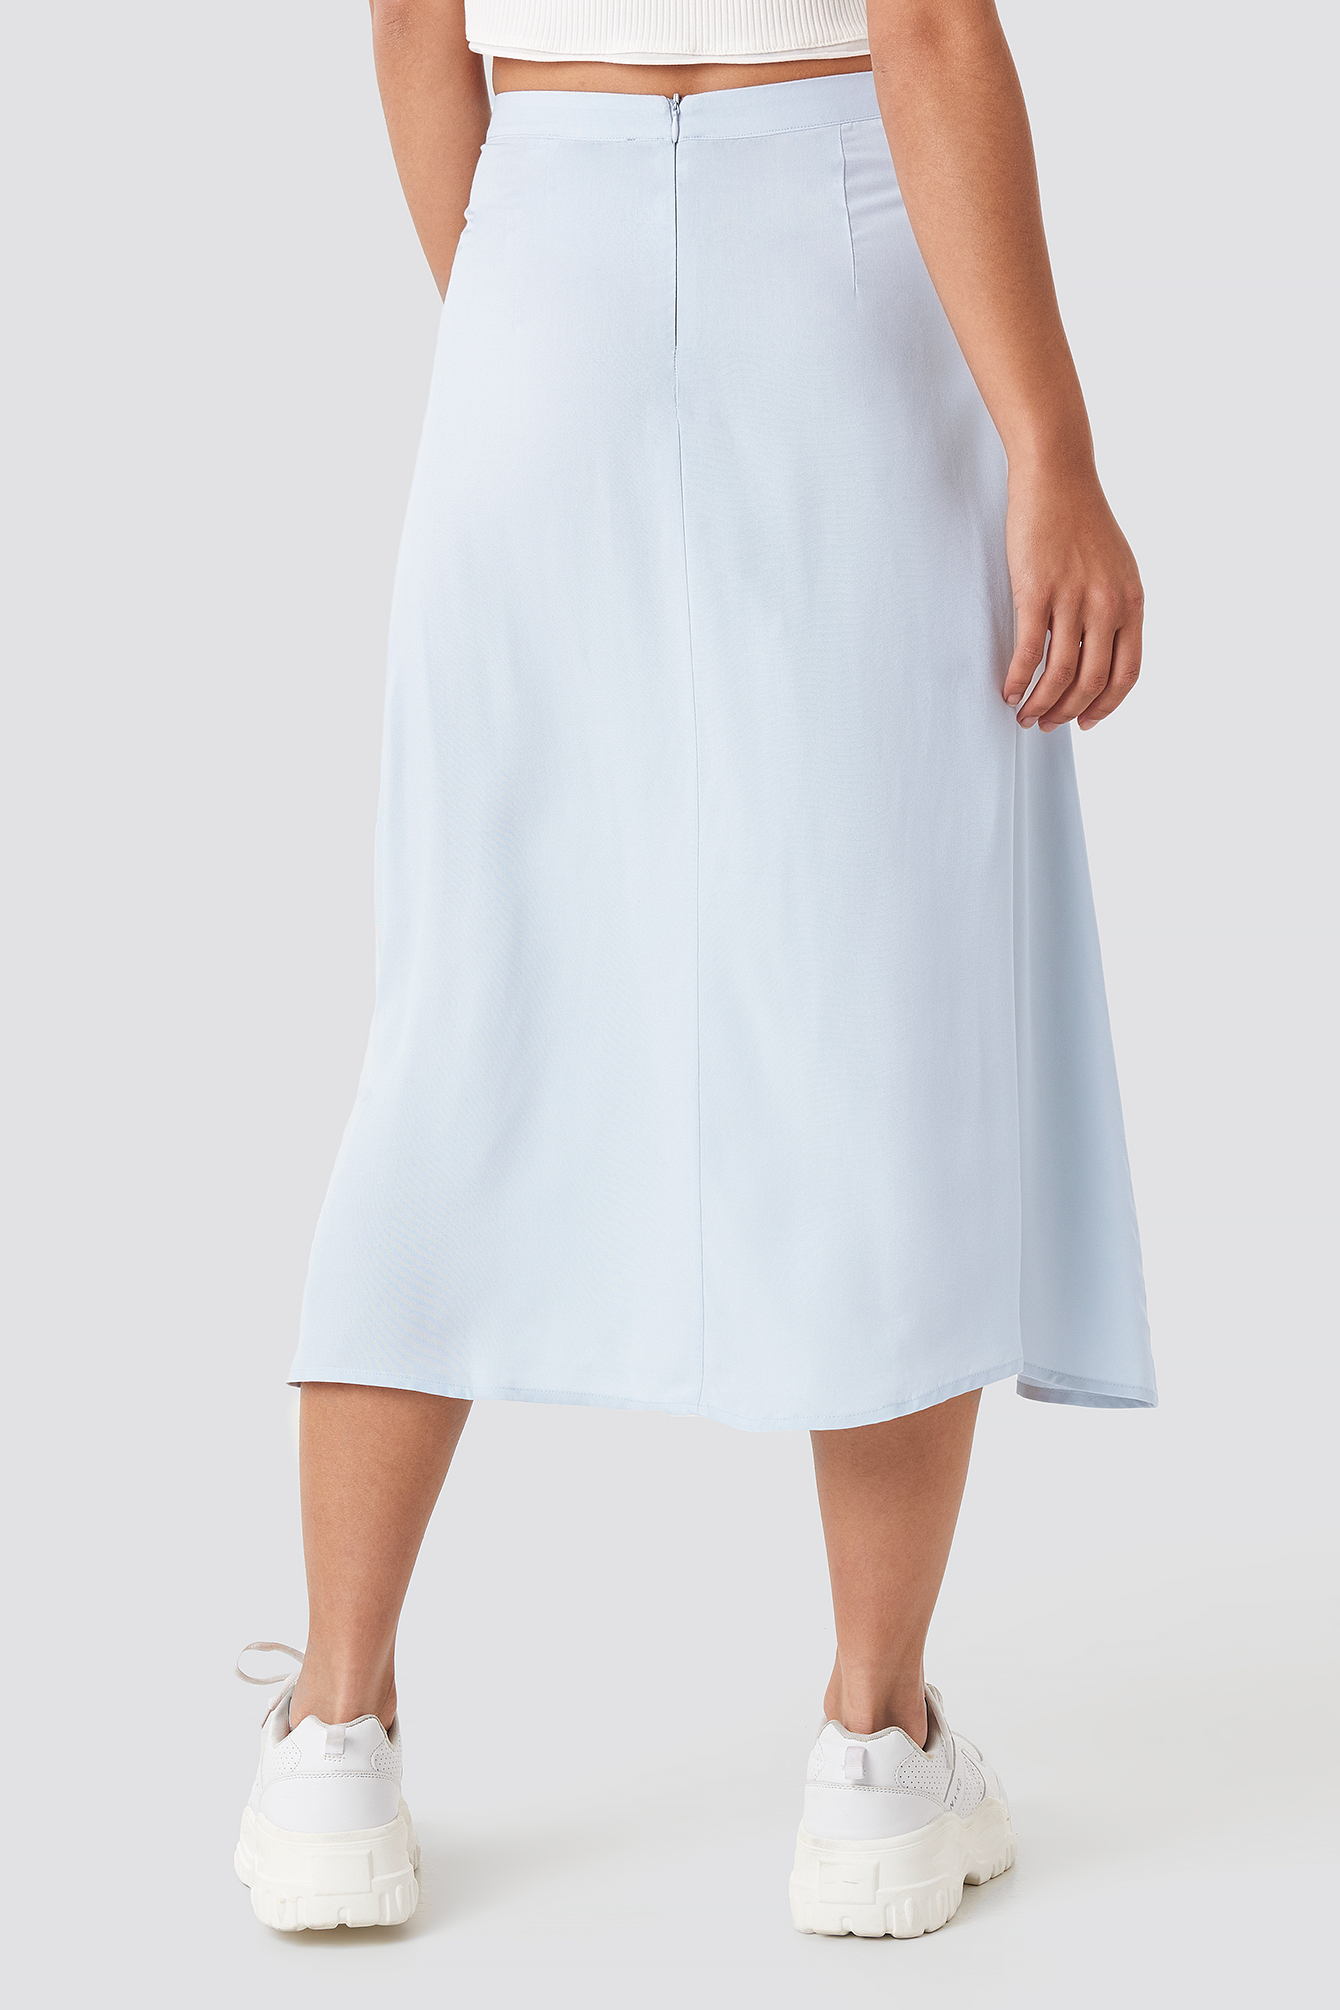 NA-KD Synthetik Trend High Waist Side Split Midi Skirt in Blau Damen Bekleidung Röcke Mittellange Röcke 